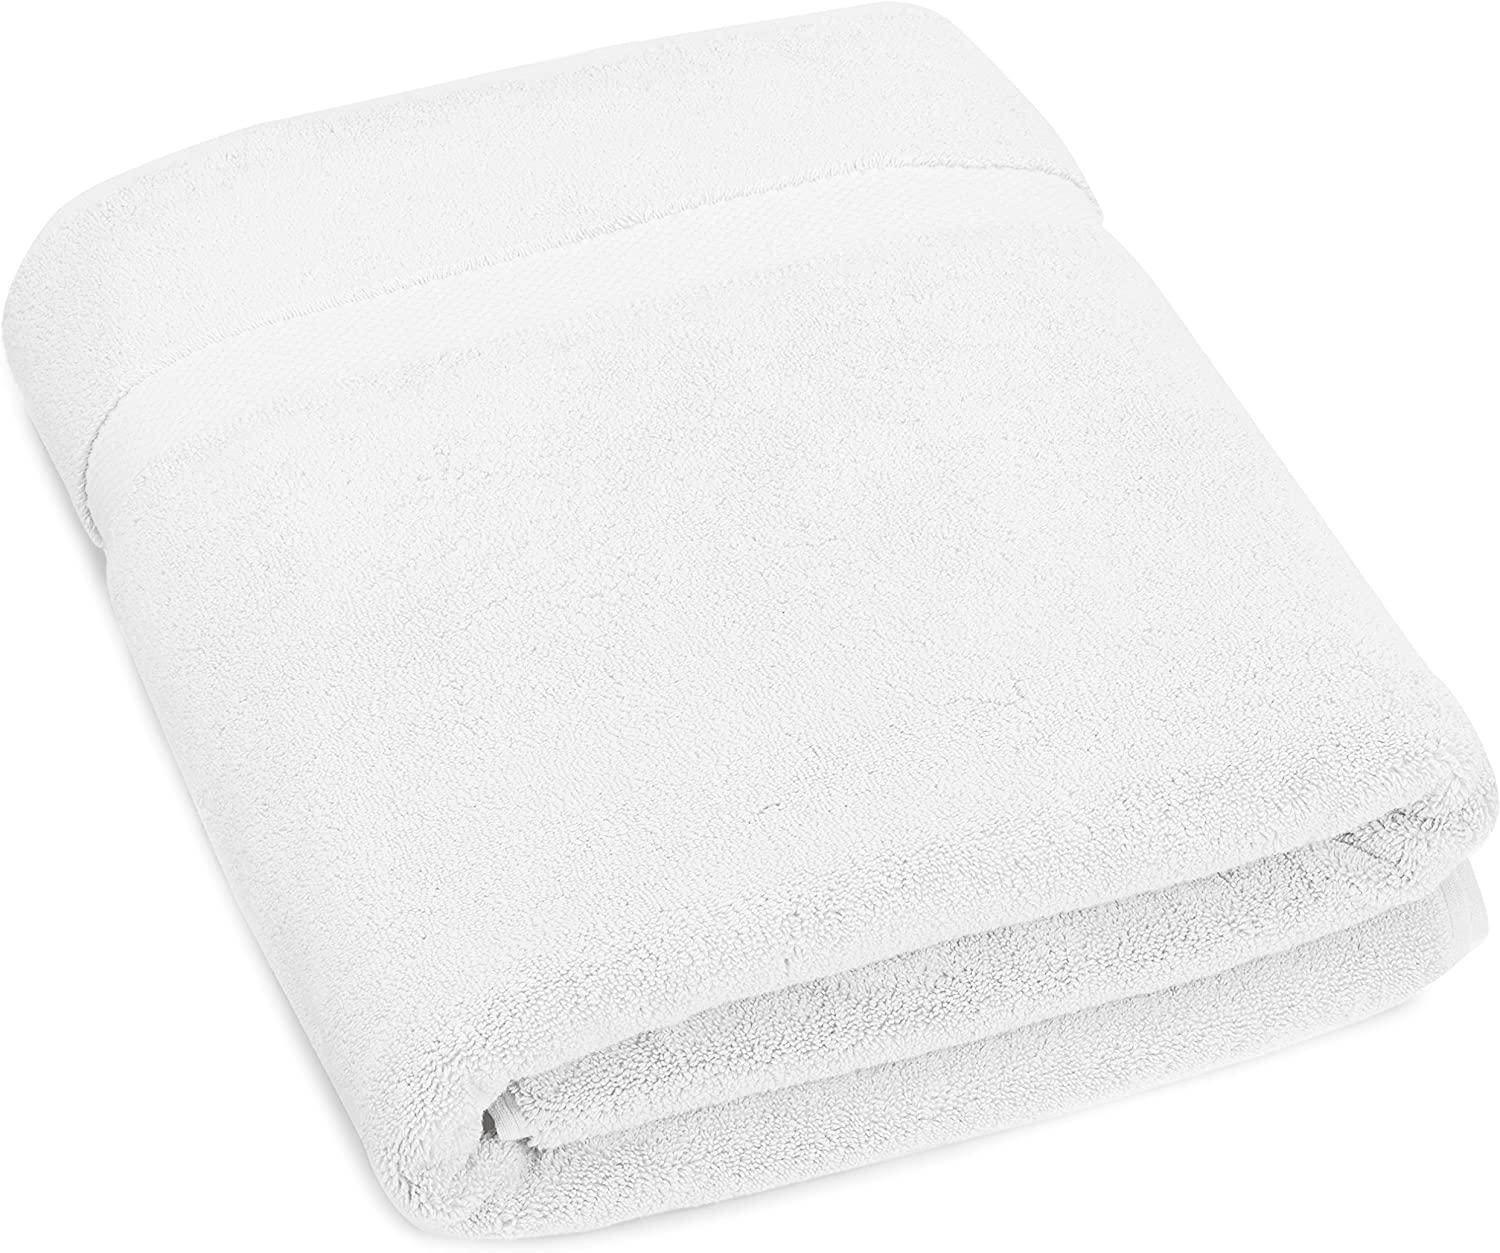 https://www.dontwasteyourmoney.com/wp-content/uploads/2019/10/pinzon-1-piece-heavyweight-bath-towel.jpg